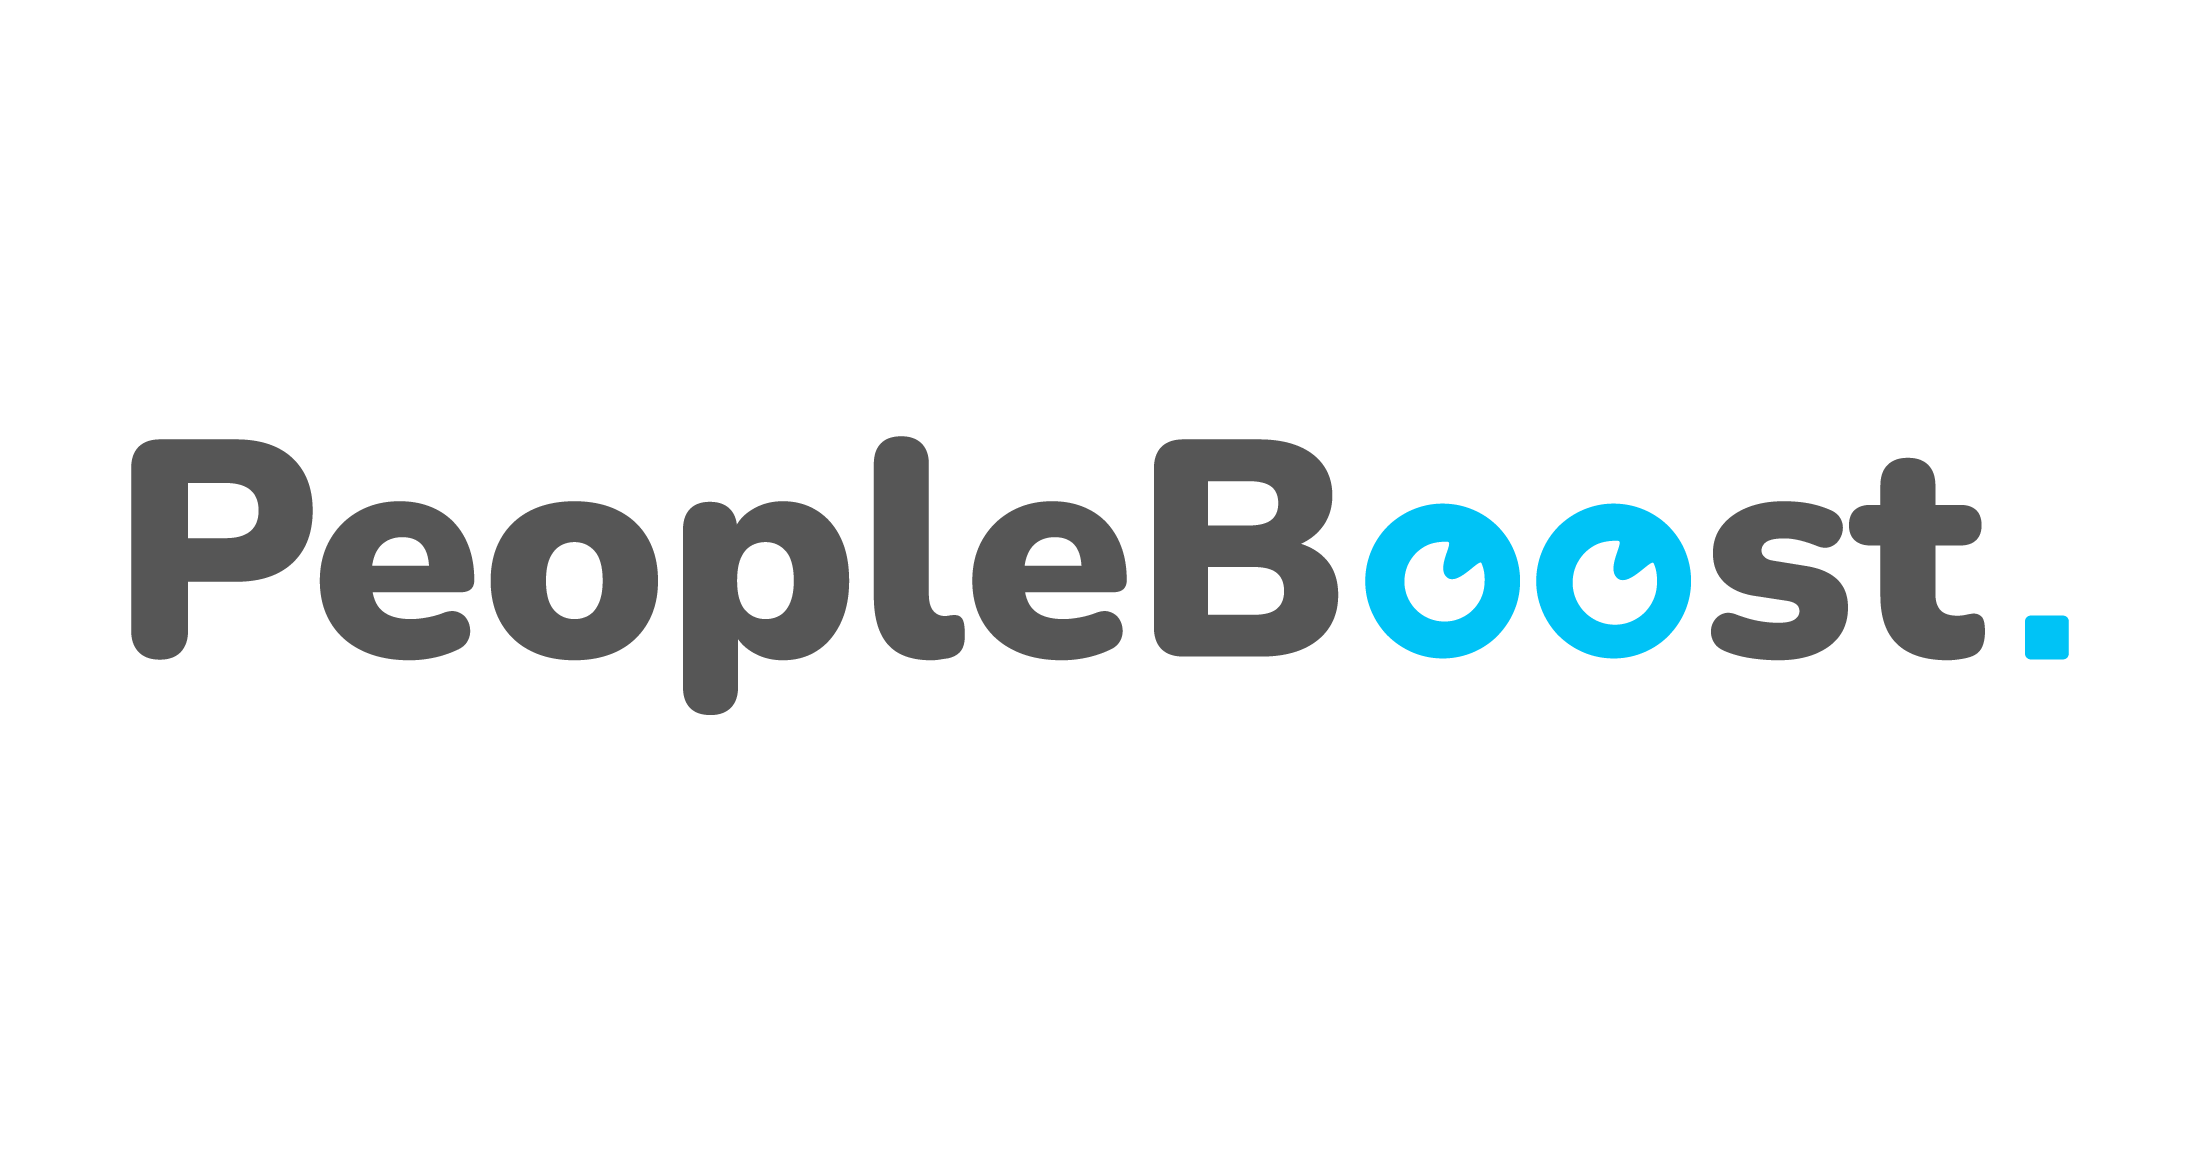 Peopleboost logo sansW 2